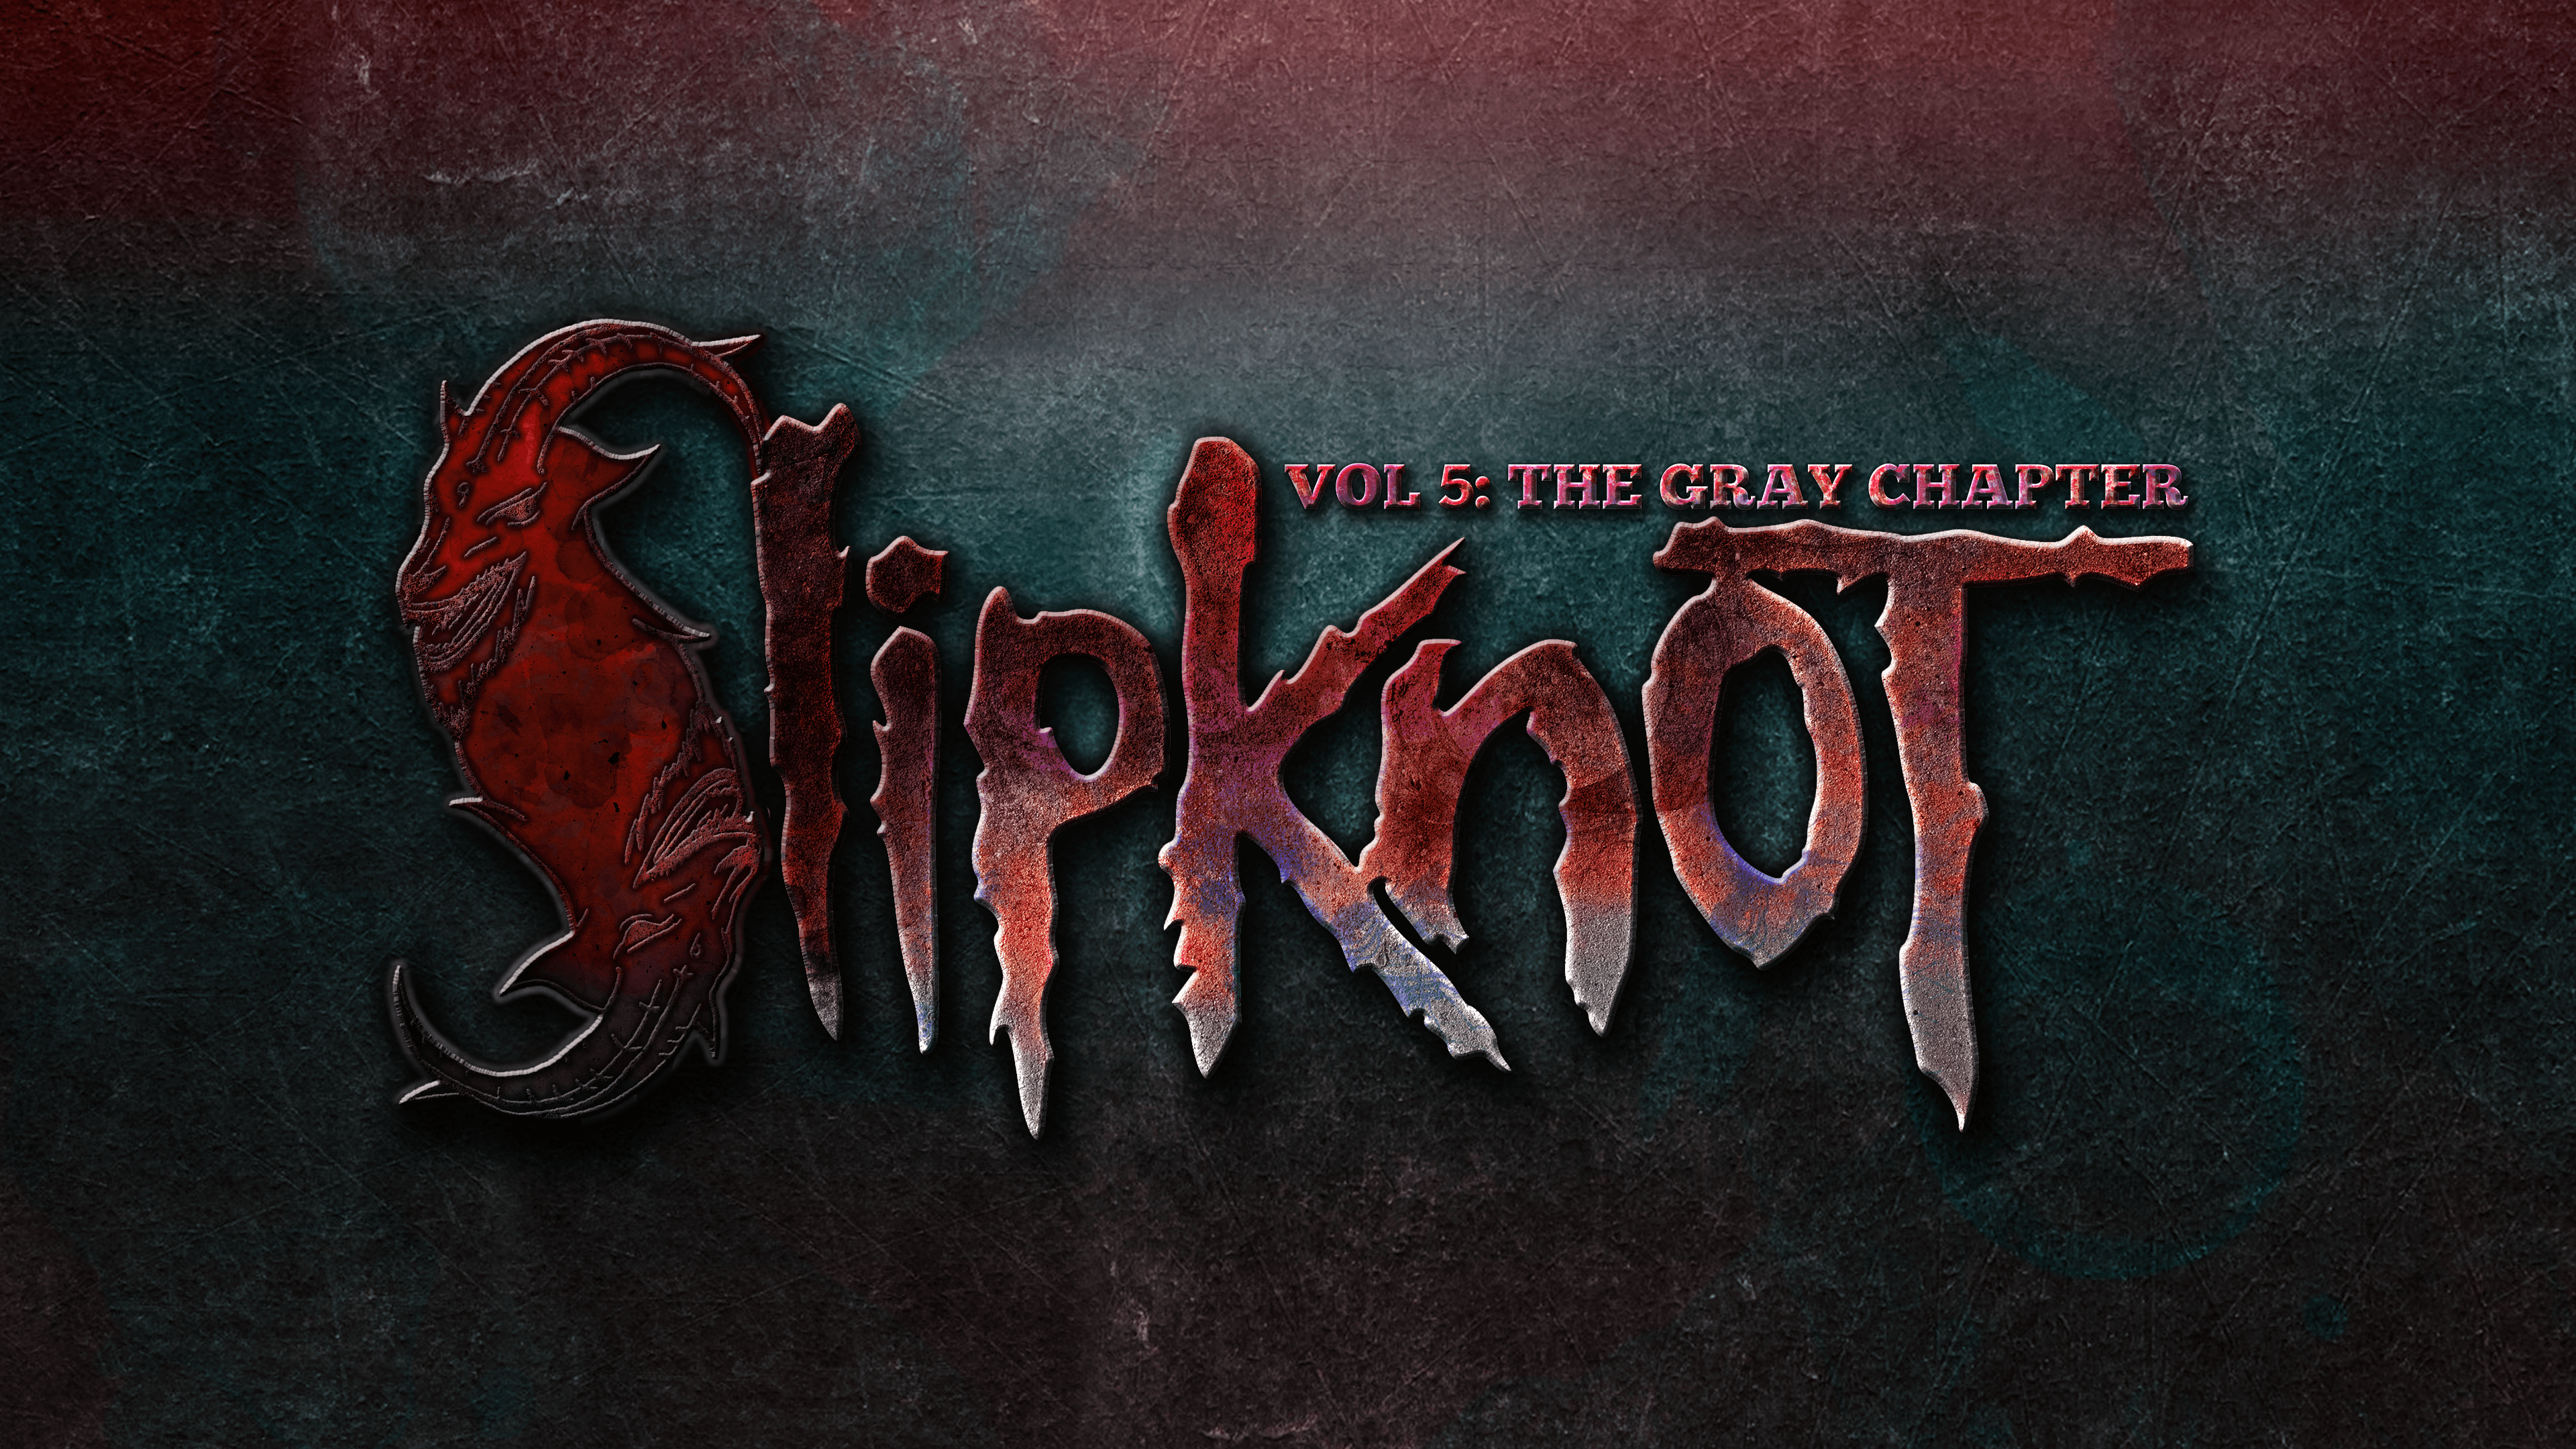 Slipknot 2016 Wallpapers - Wallpaper Cave